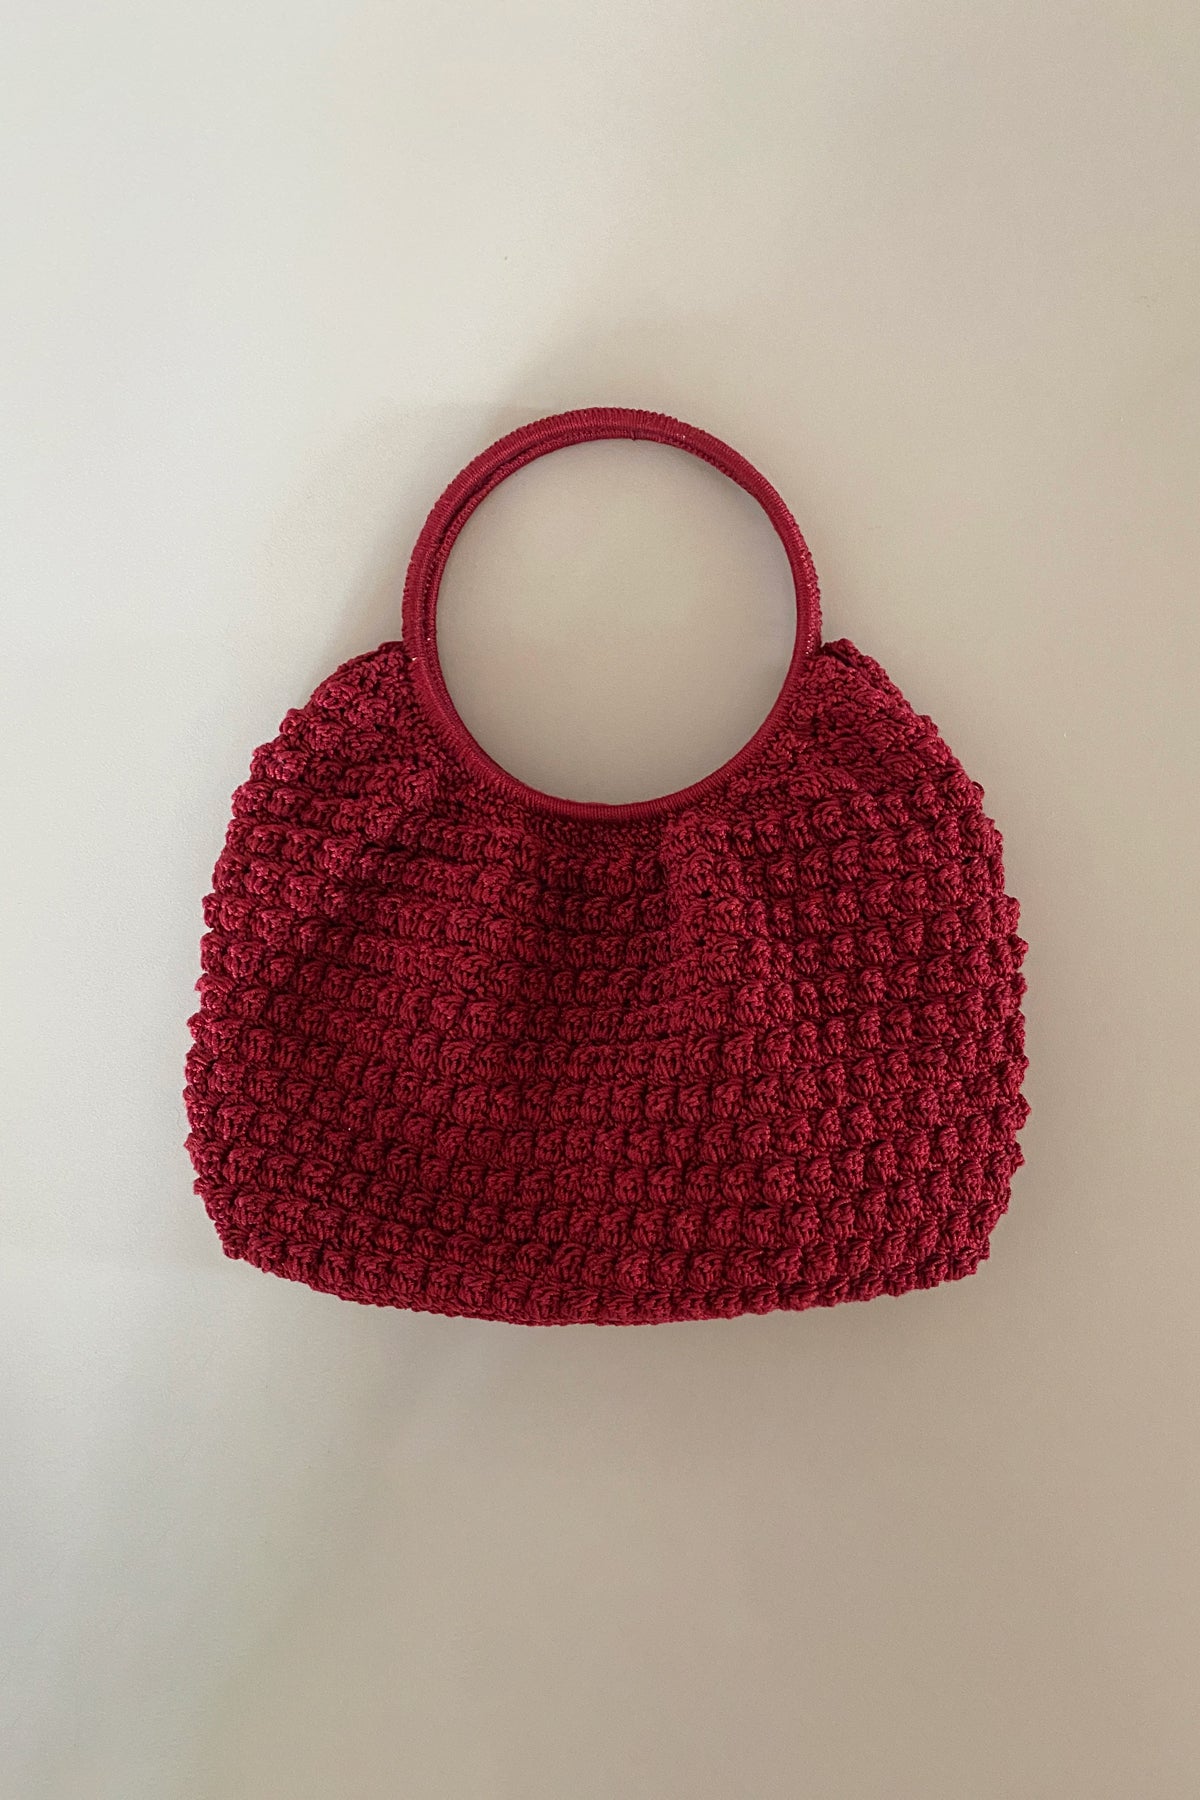 Ivy purse - cherry red